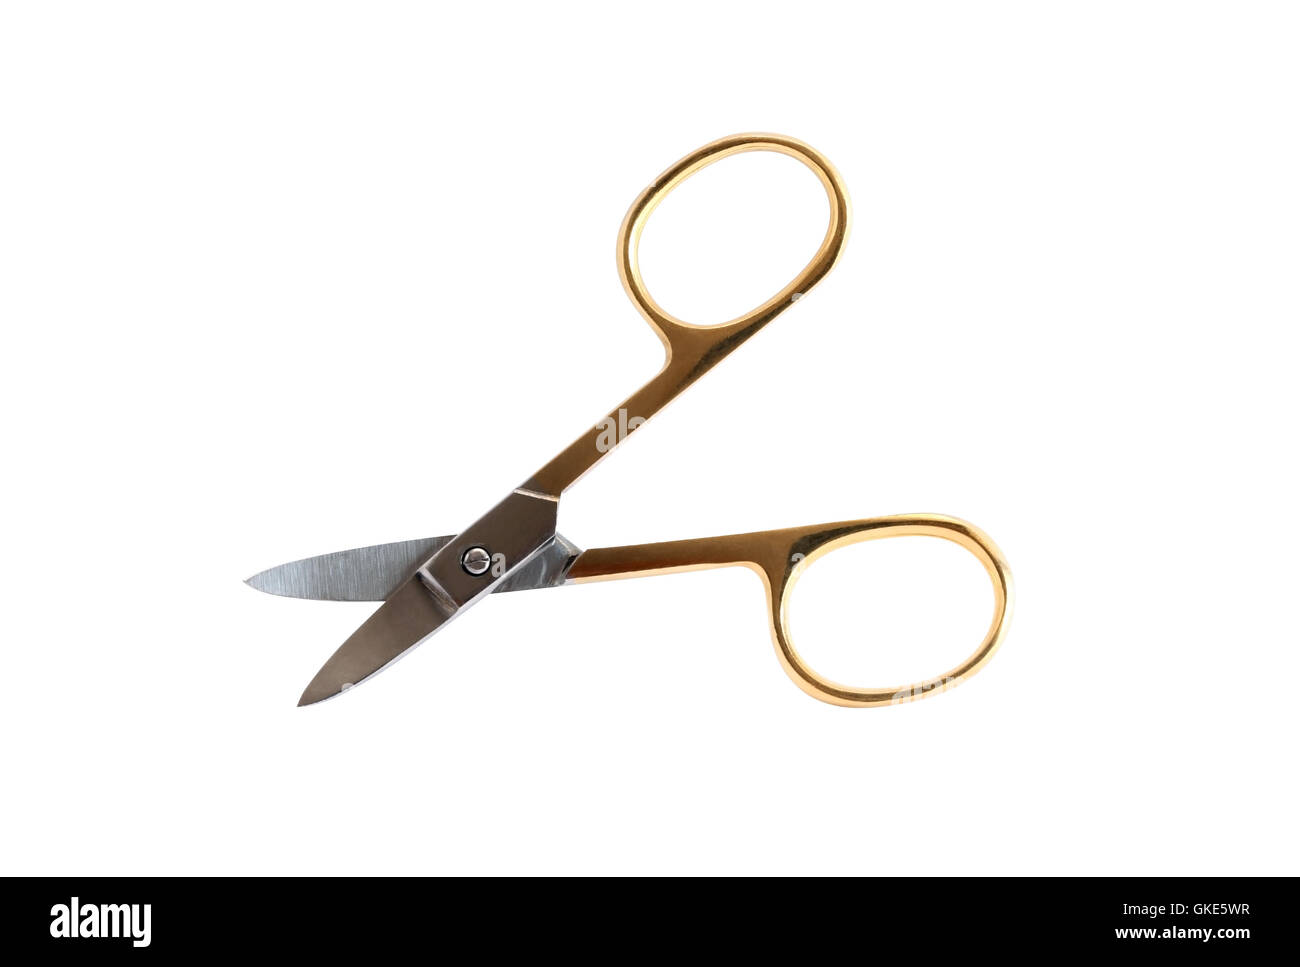 Manicure Scissors On White Stock Photo